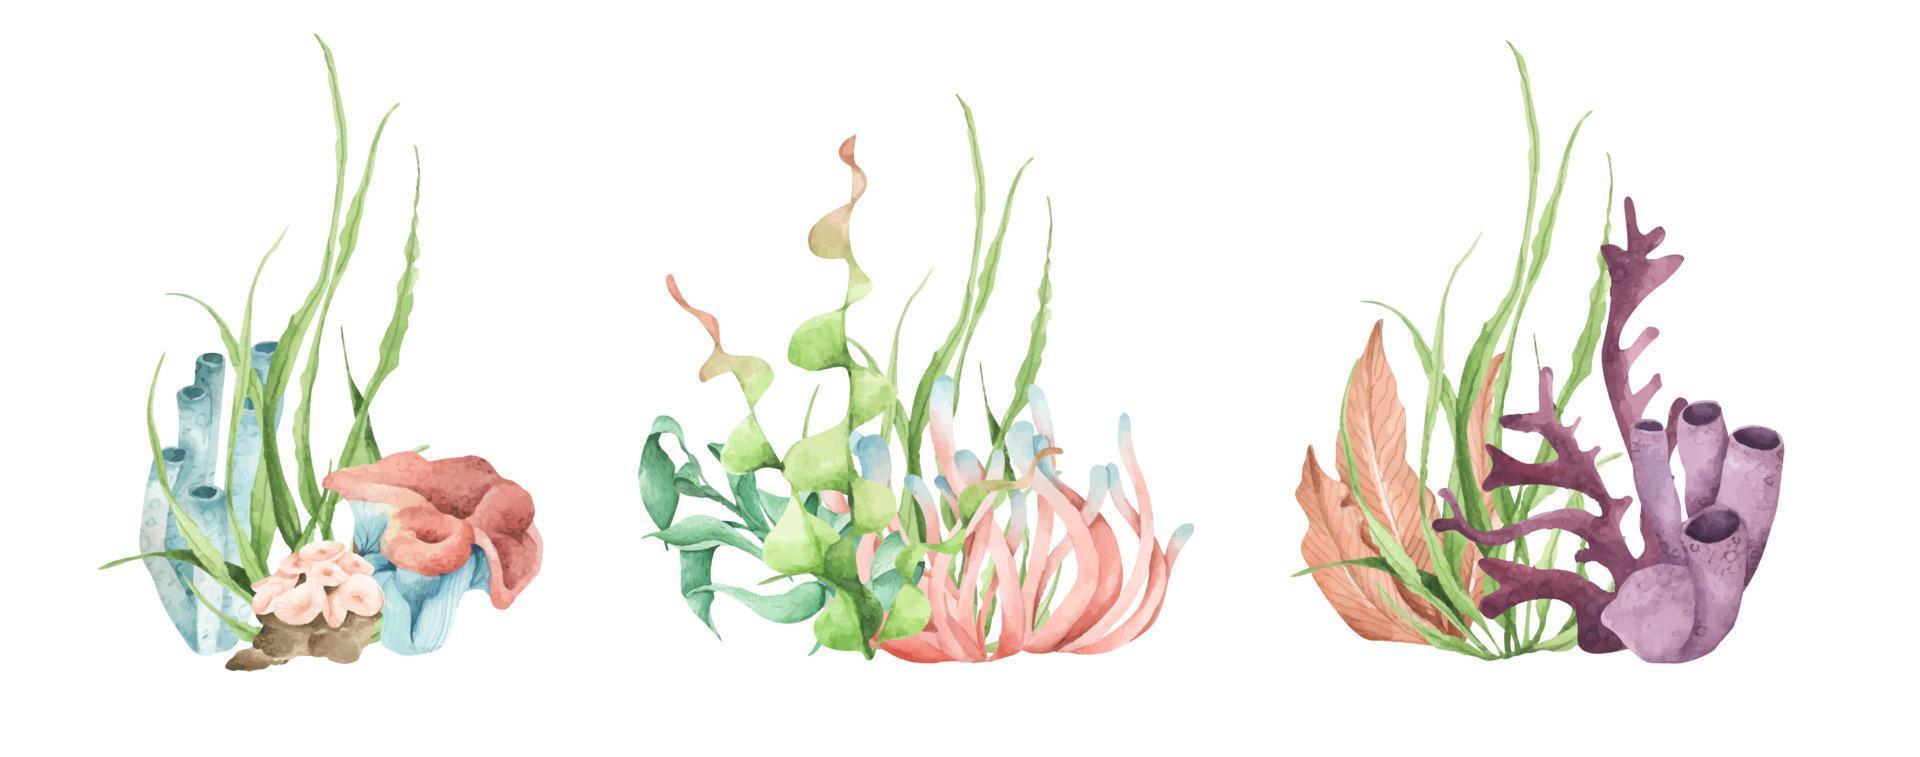 sjögräs. undervattens havsväxter, havskorallelement. akvarell illustration. vektor